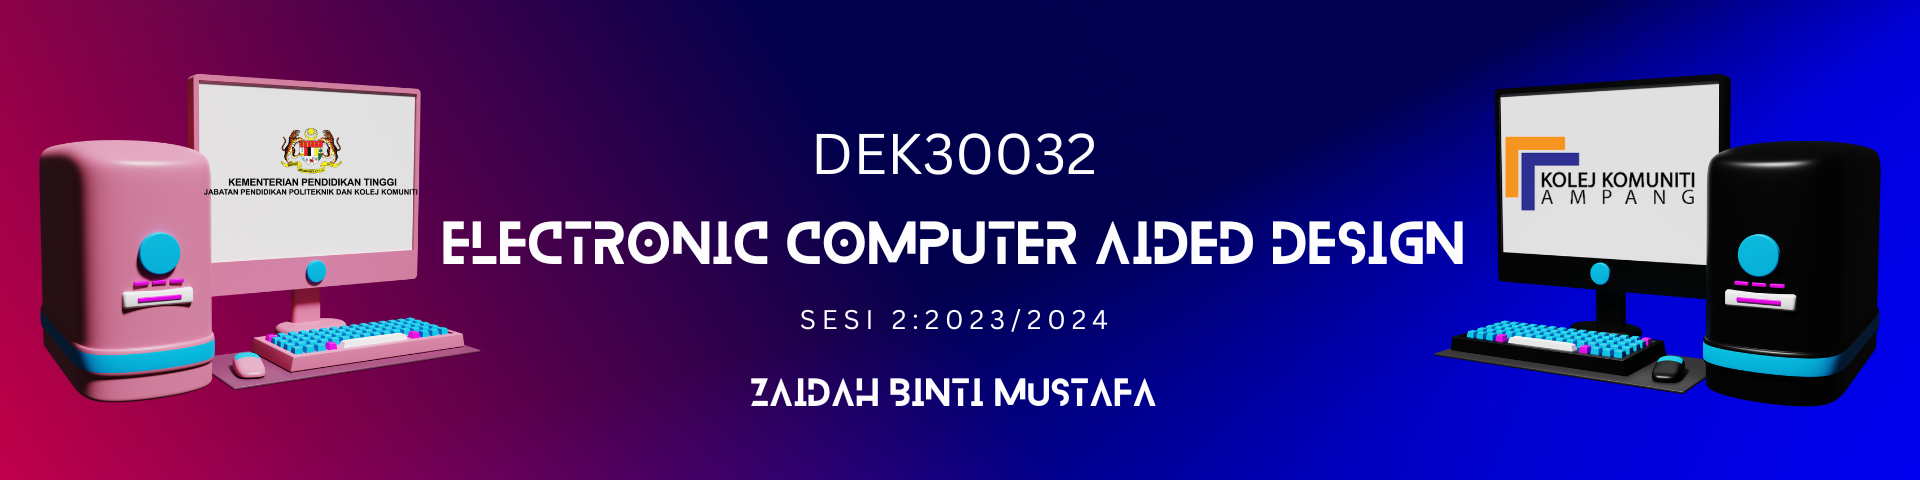 DEK 30032 ELECTRONIC COMPUTER AIDED DESIGN